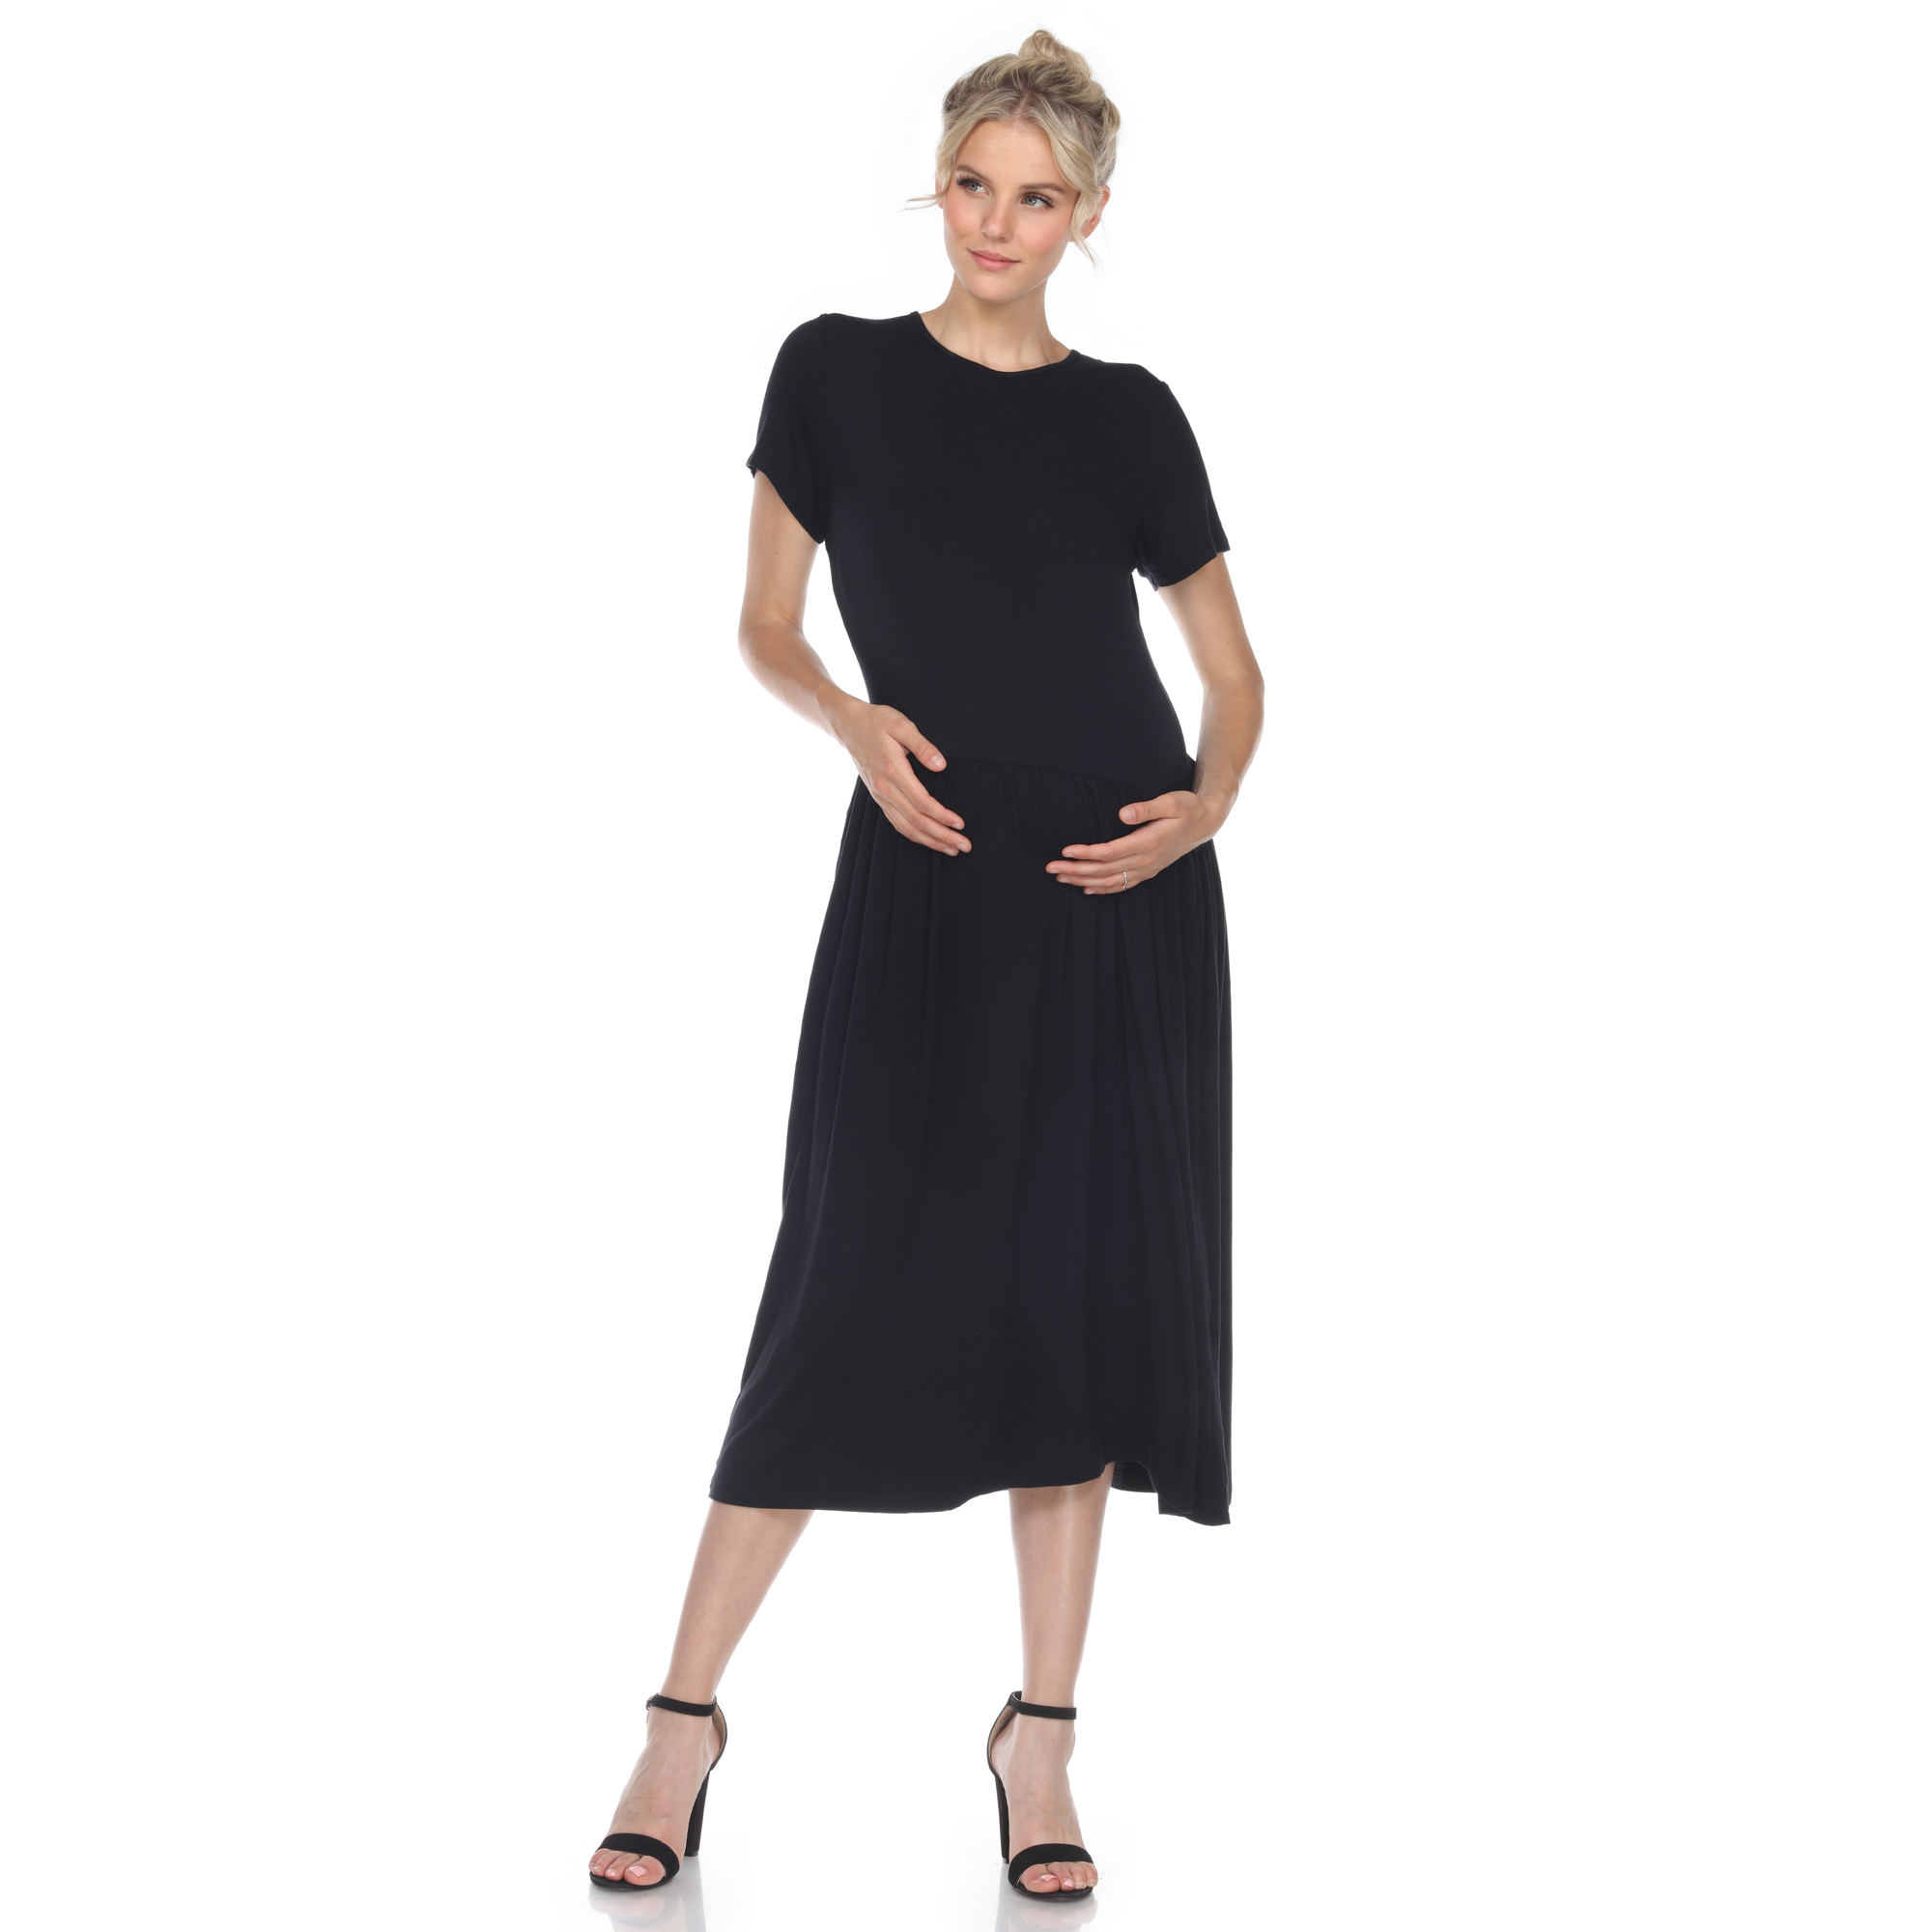 White Mark Womenâs Maternity Short Sleeve Maxi Dress - Black, Small